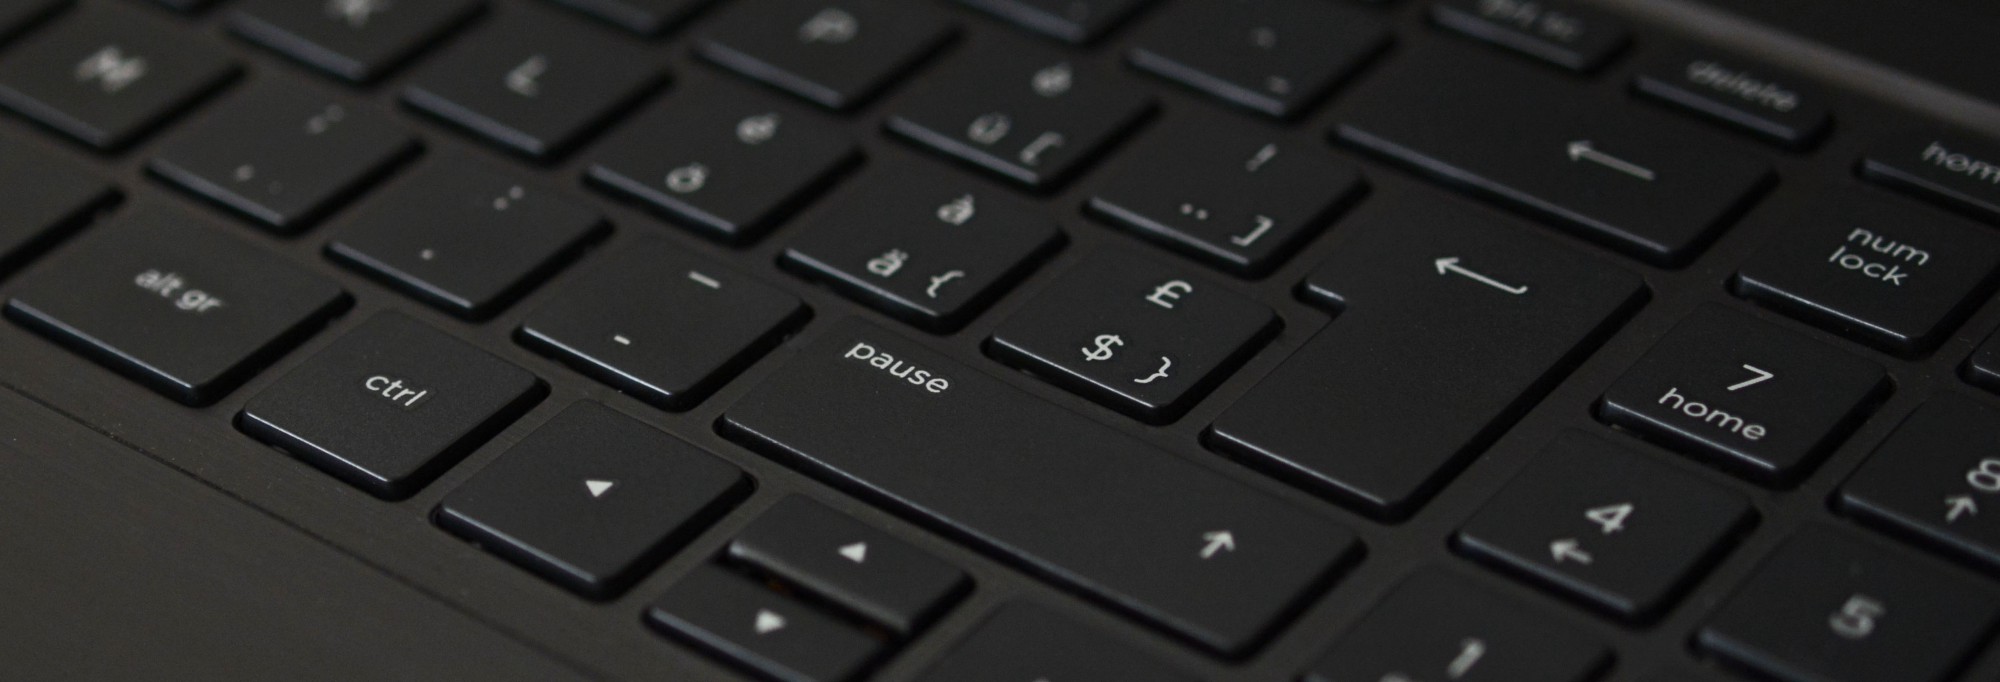 A close up, angled shot of a black computer keyboard